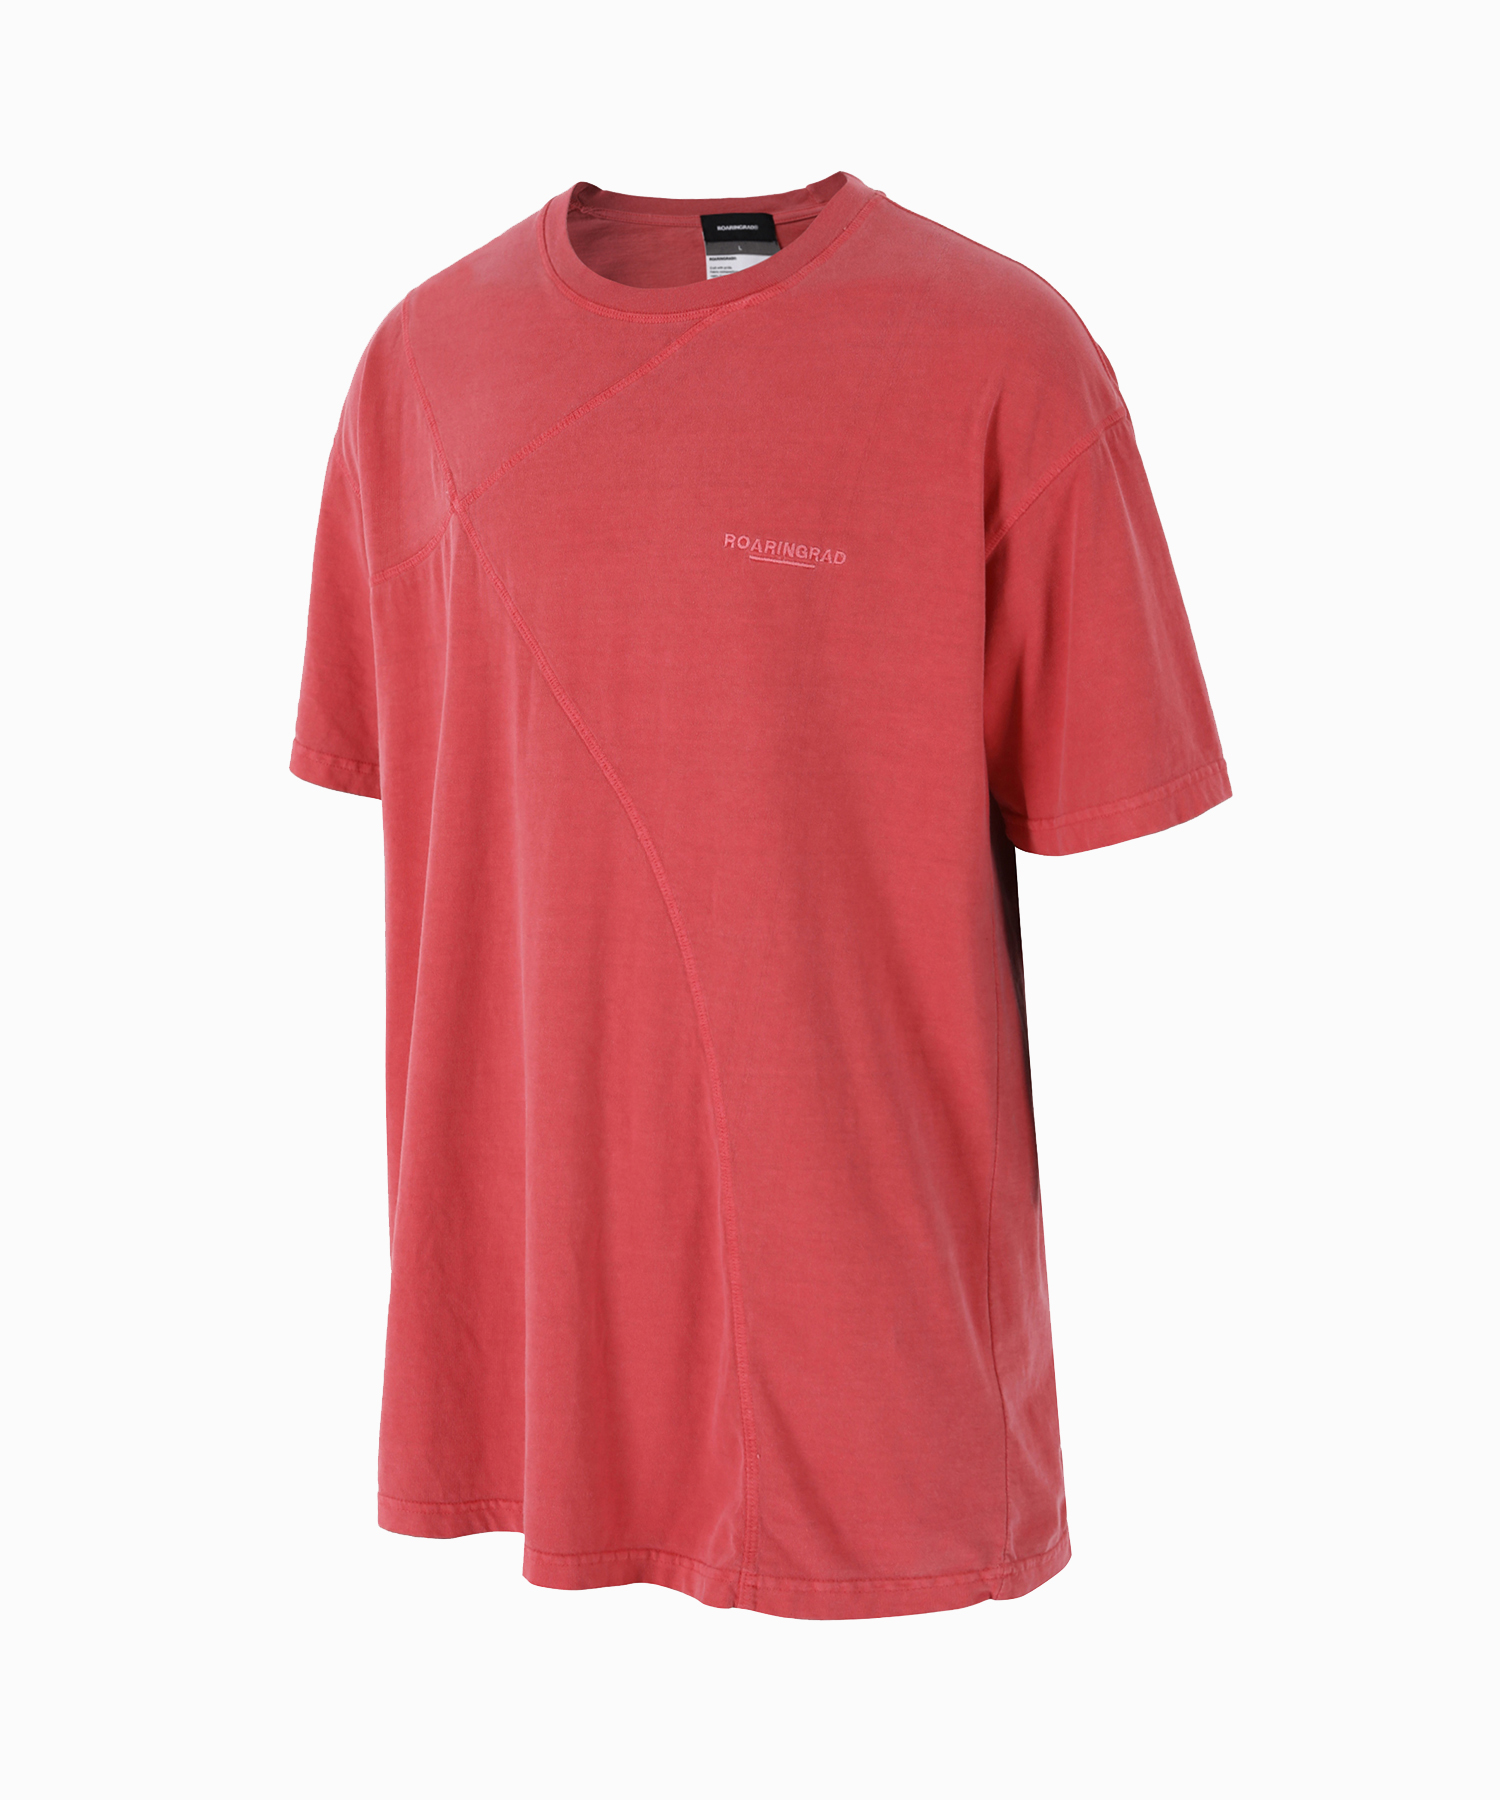 pigment incision over t-shirt red - 로어링라드(ROARINGRAD)